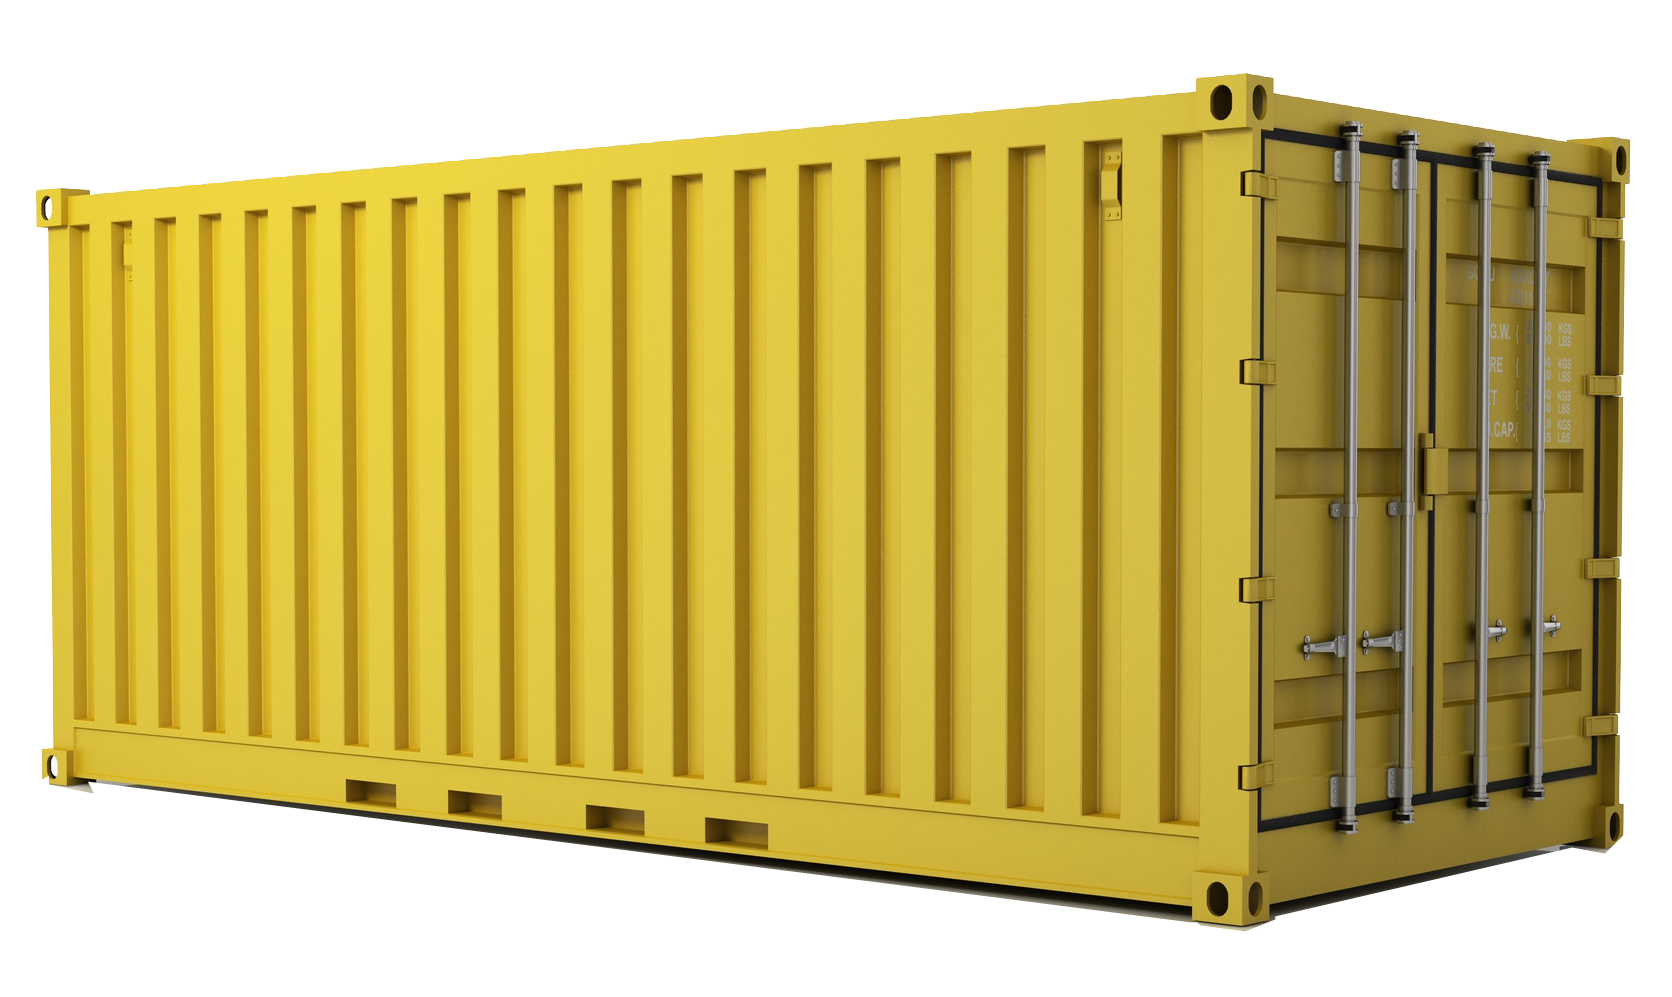 kisspng-intermodal-container-shipping-container-architectu-container-5abc80b1e33ef5.0552020715223031539308